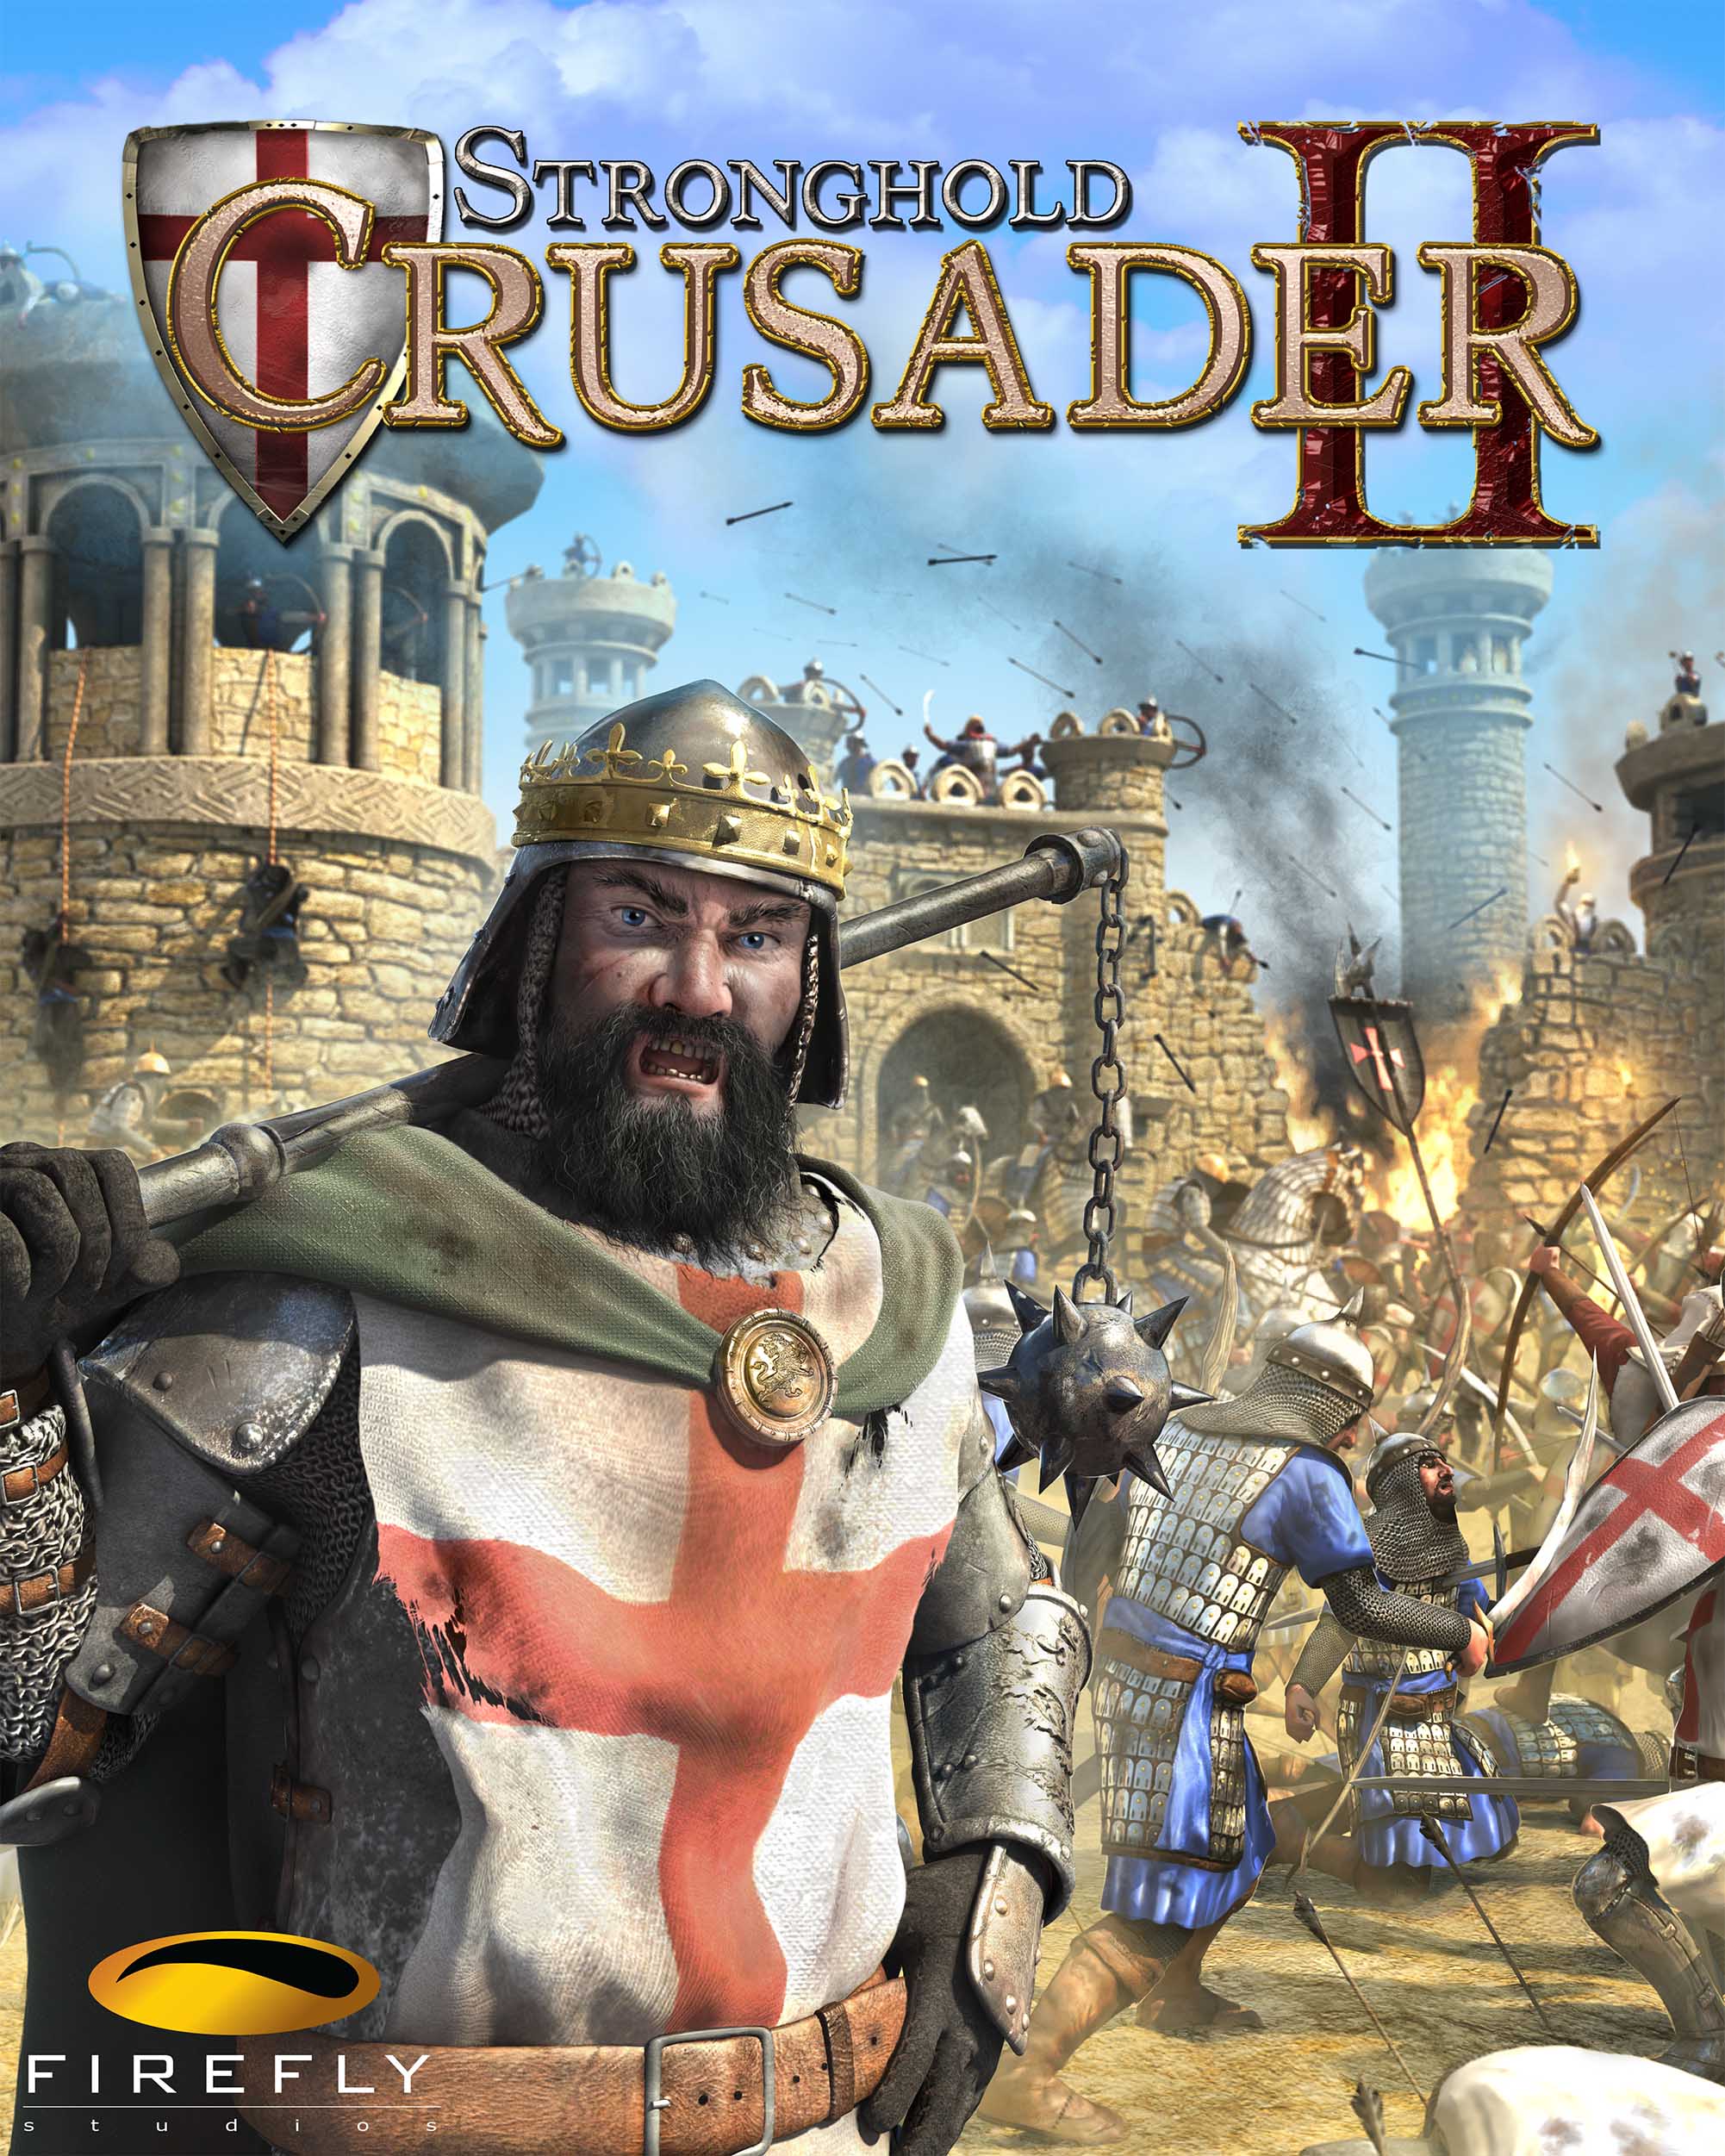 Crusader2_cover_S